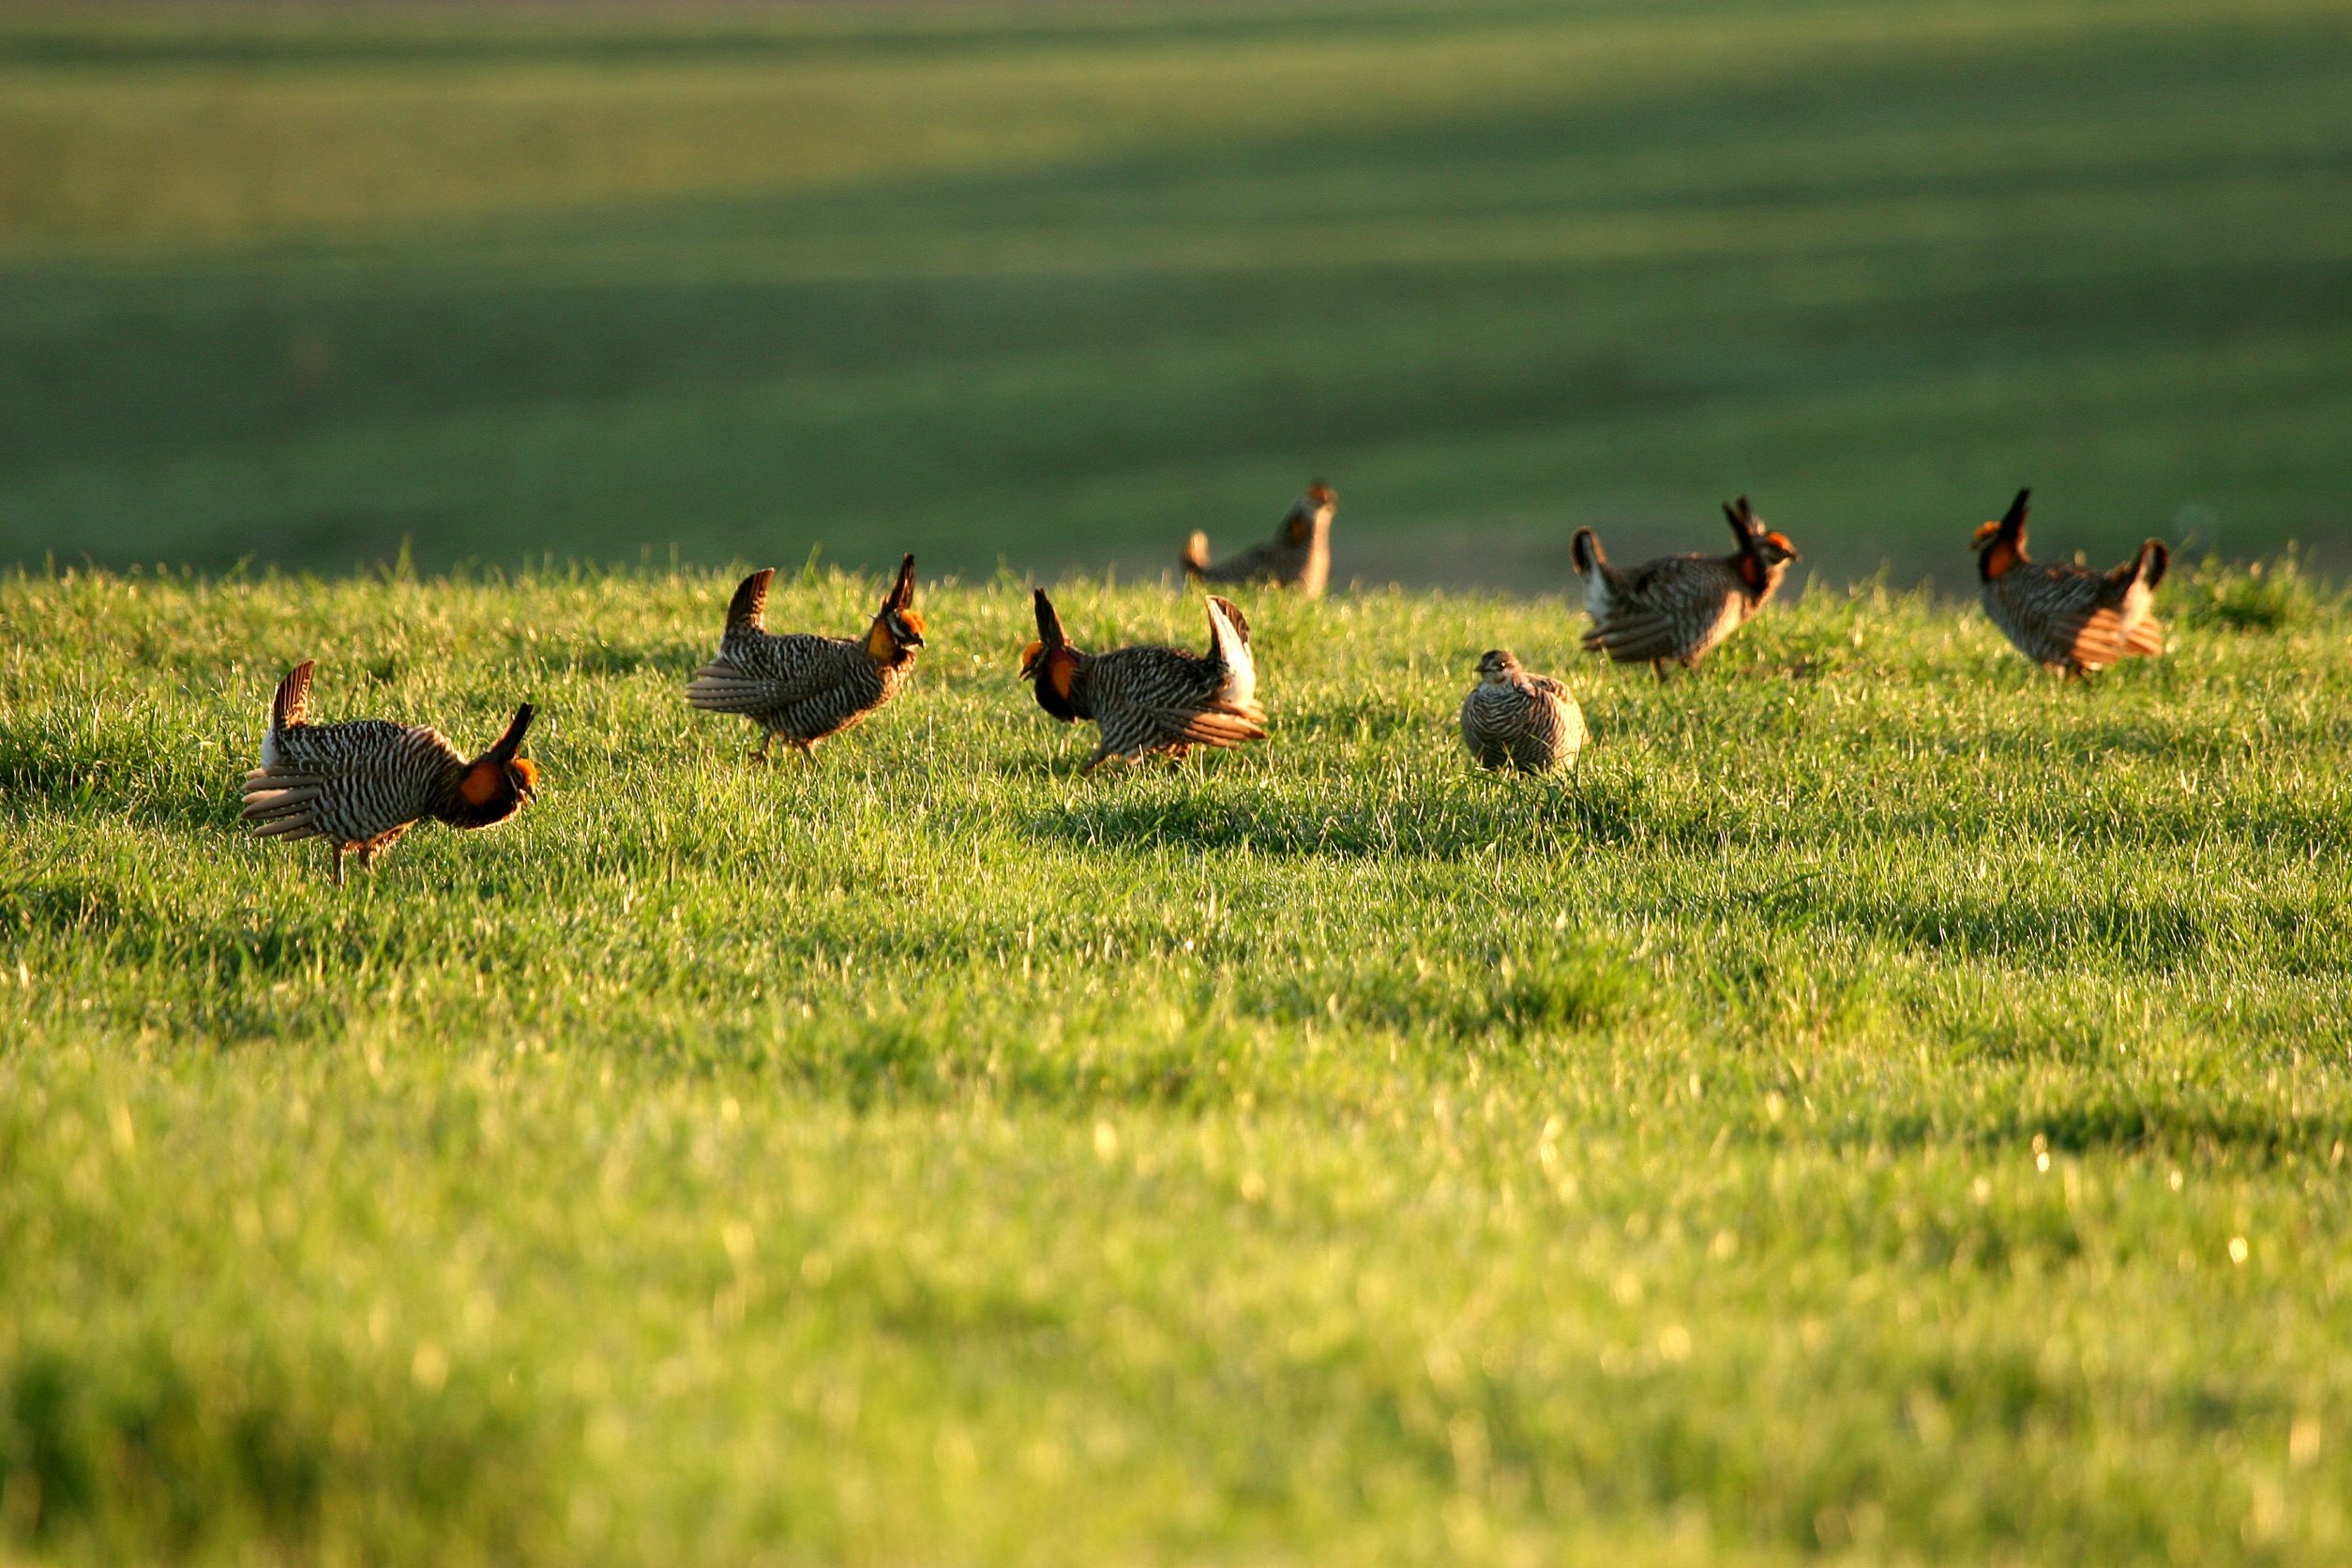 A group of prairie chickens gather in a grassy prairie field.